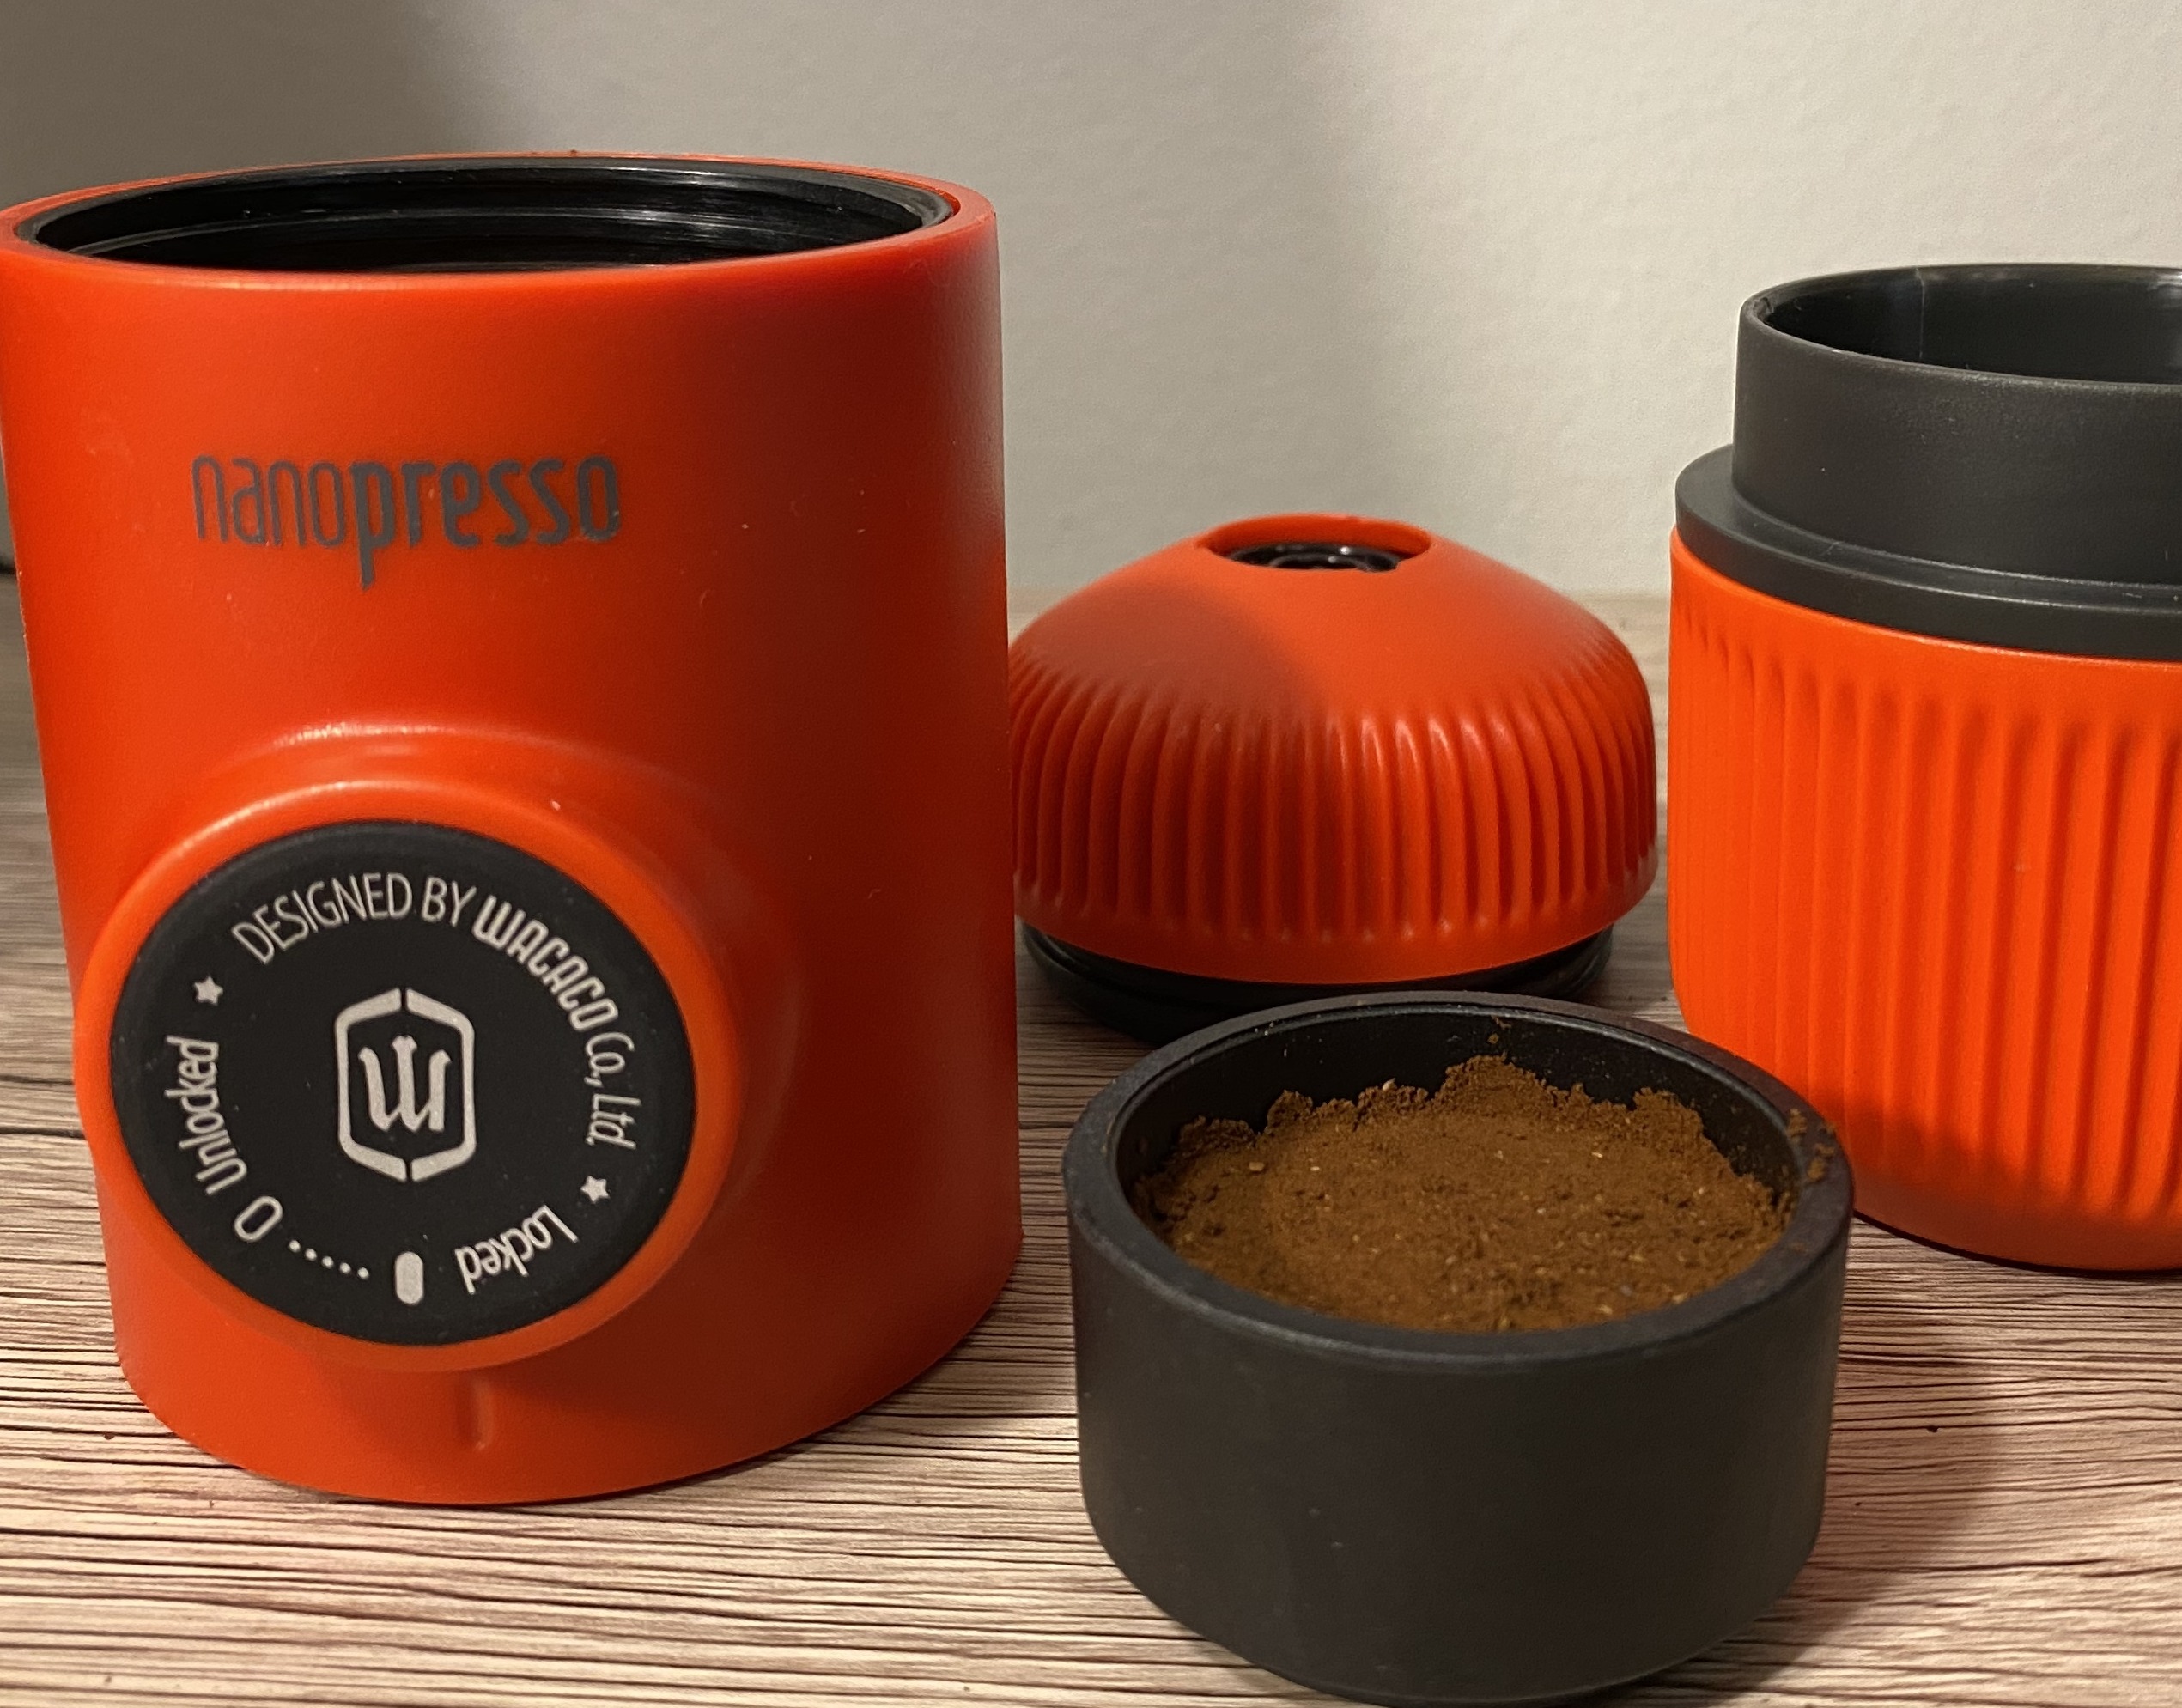 Wacaco Nanopresso coffee basket and scoop